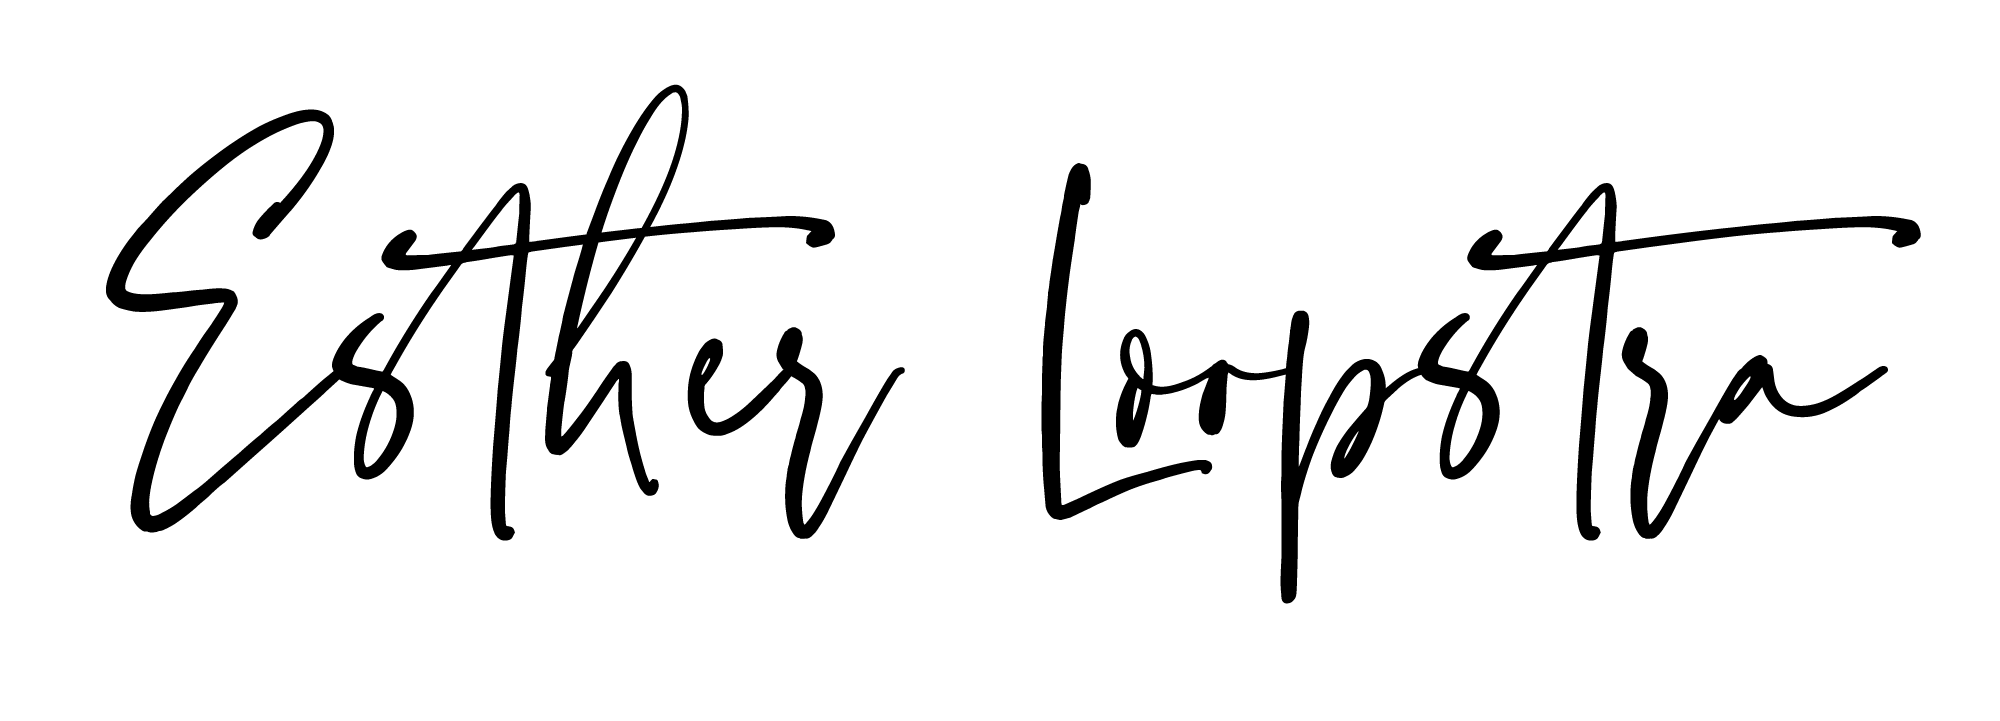 Logo Horizontal Copy